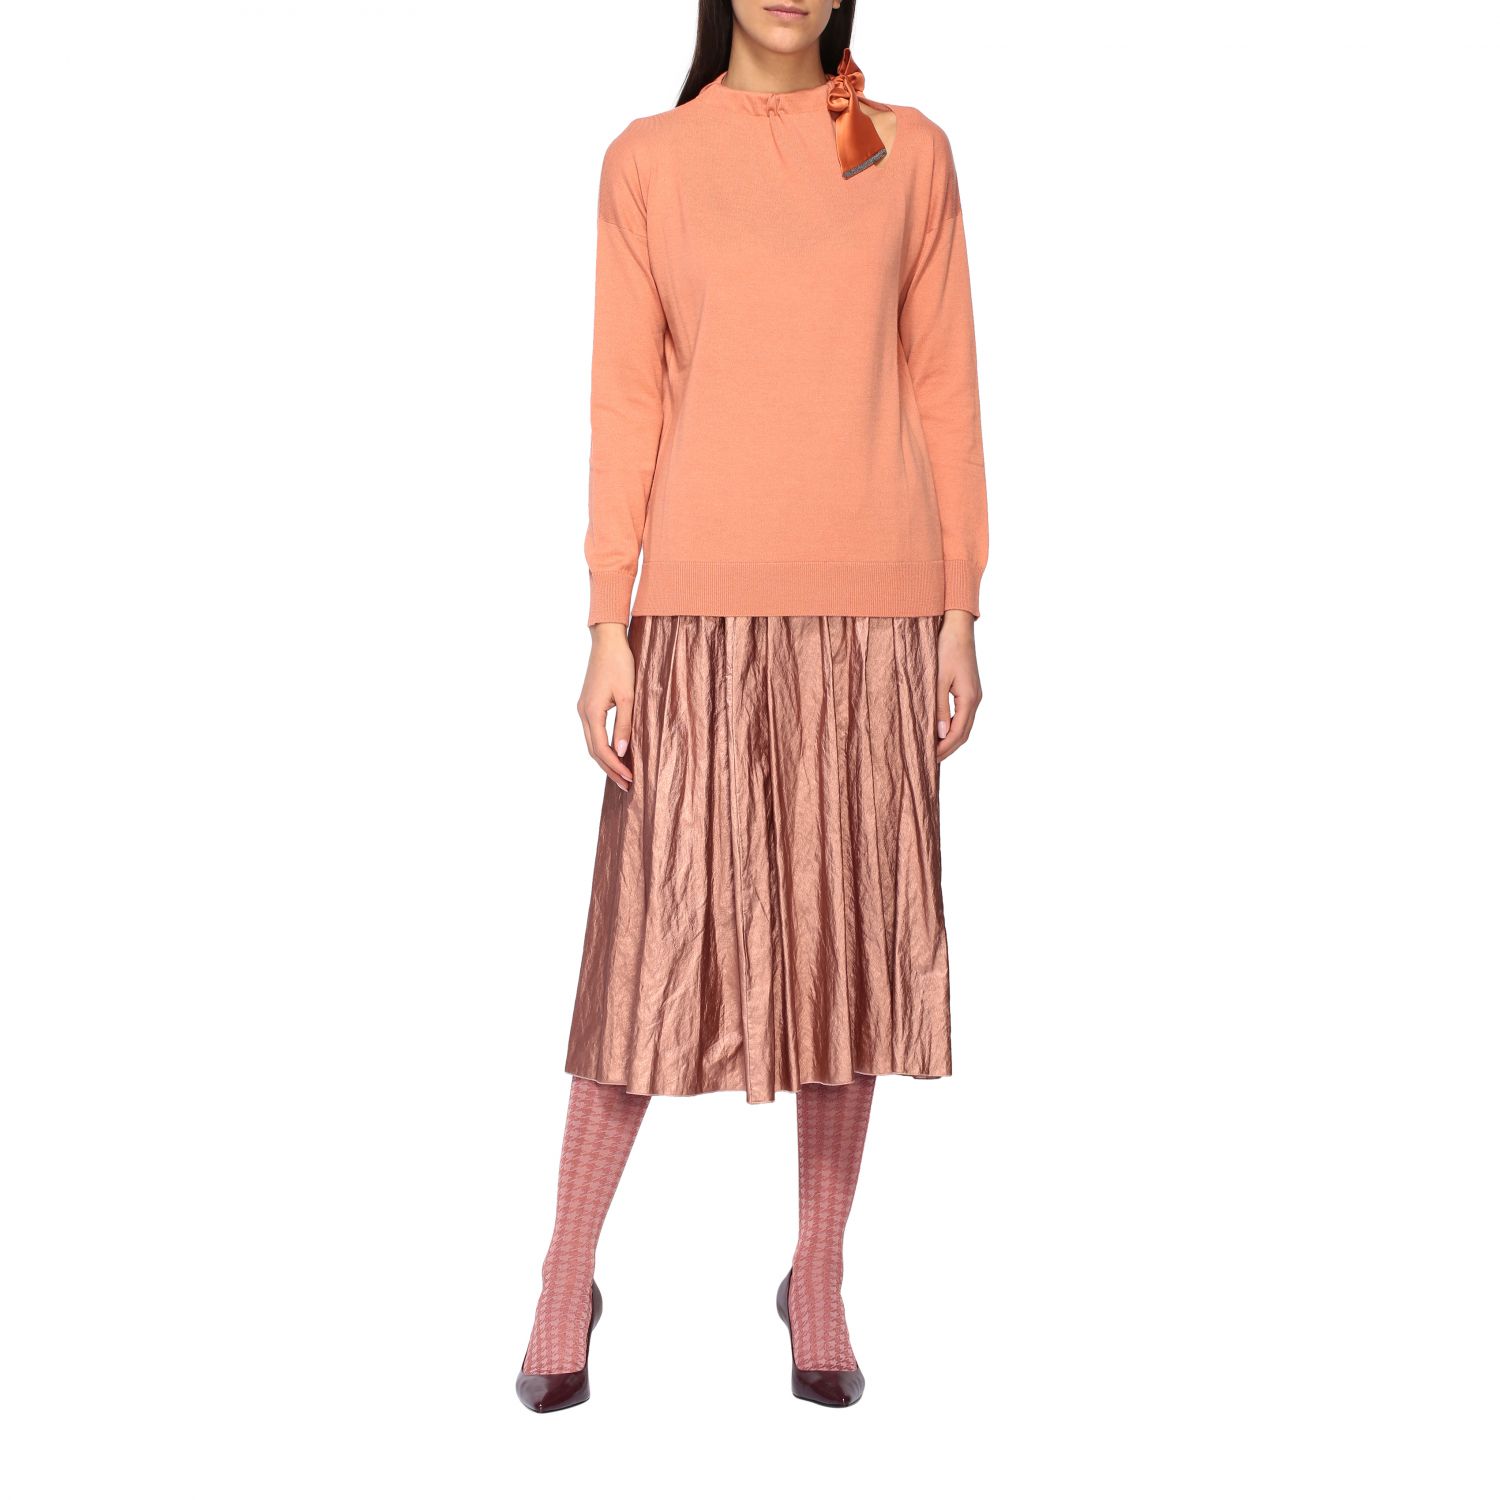 Fabiana Filippi Outlet: sweater for woman - Orange | Fabiana Filippi ...